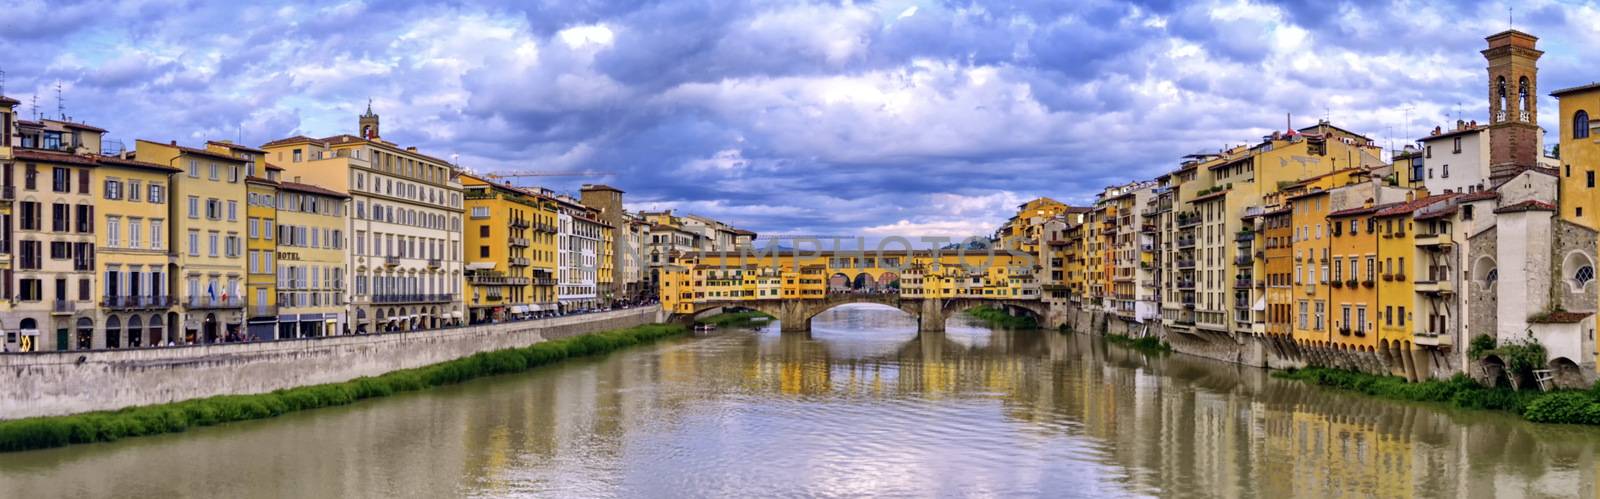 Ponte vecchio, Florence, Firenze, Italia by Elenaphotos21